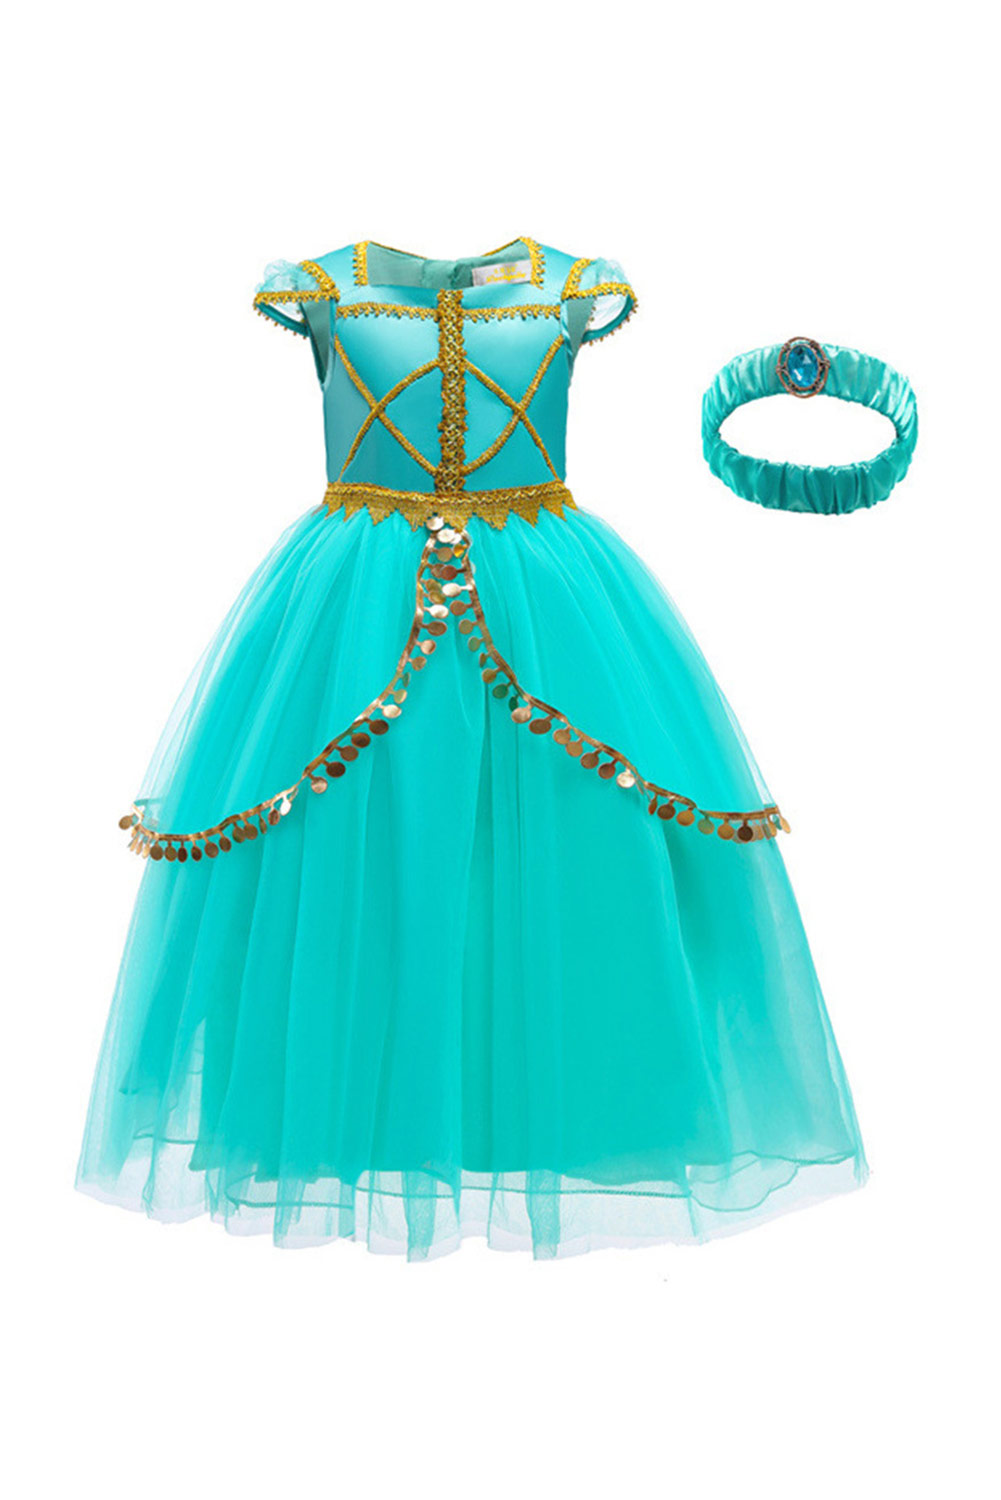 Movie Aladdin Kids Girls Jasmine Princess Dress Outfits Halloween Carnival Suit Cosplay Costume